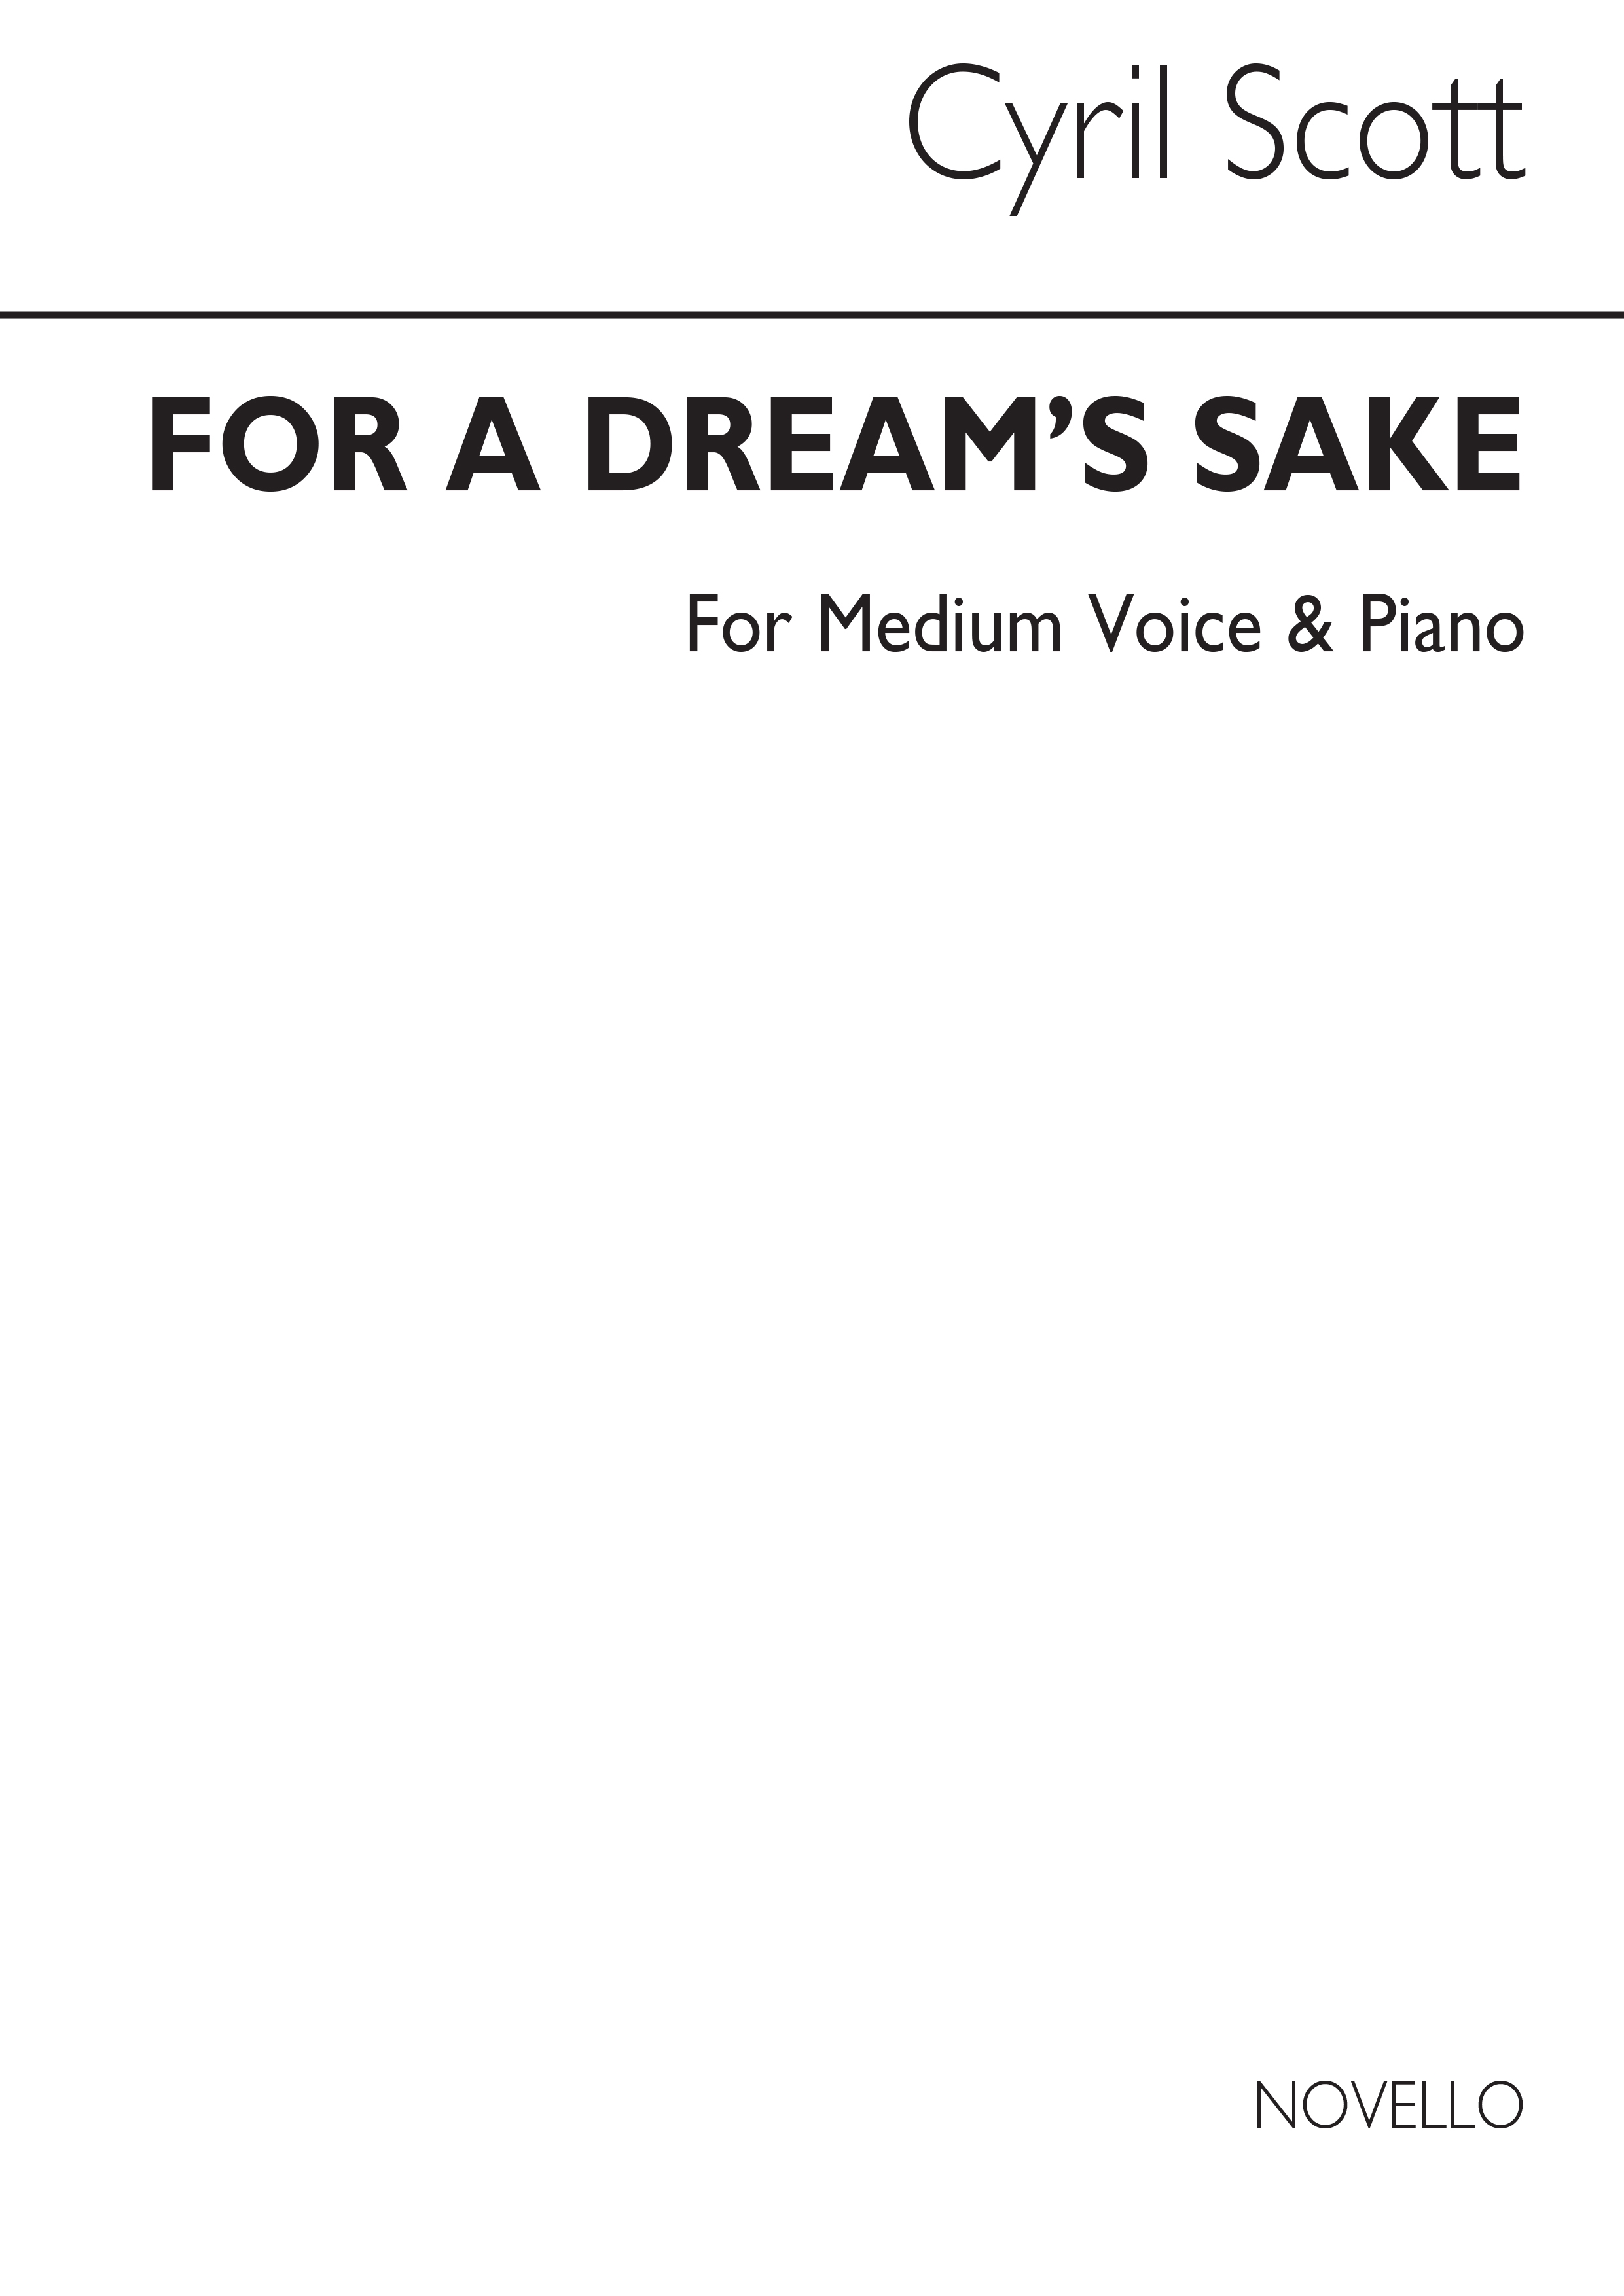 Cyril Scott: For A Dream's Sake-medium Voice/Piano (Key-b Flat): Medium Voice: